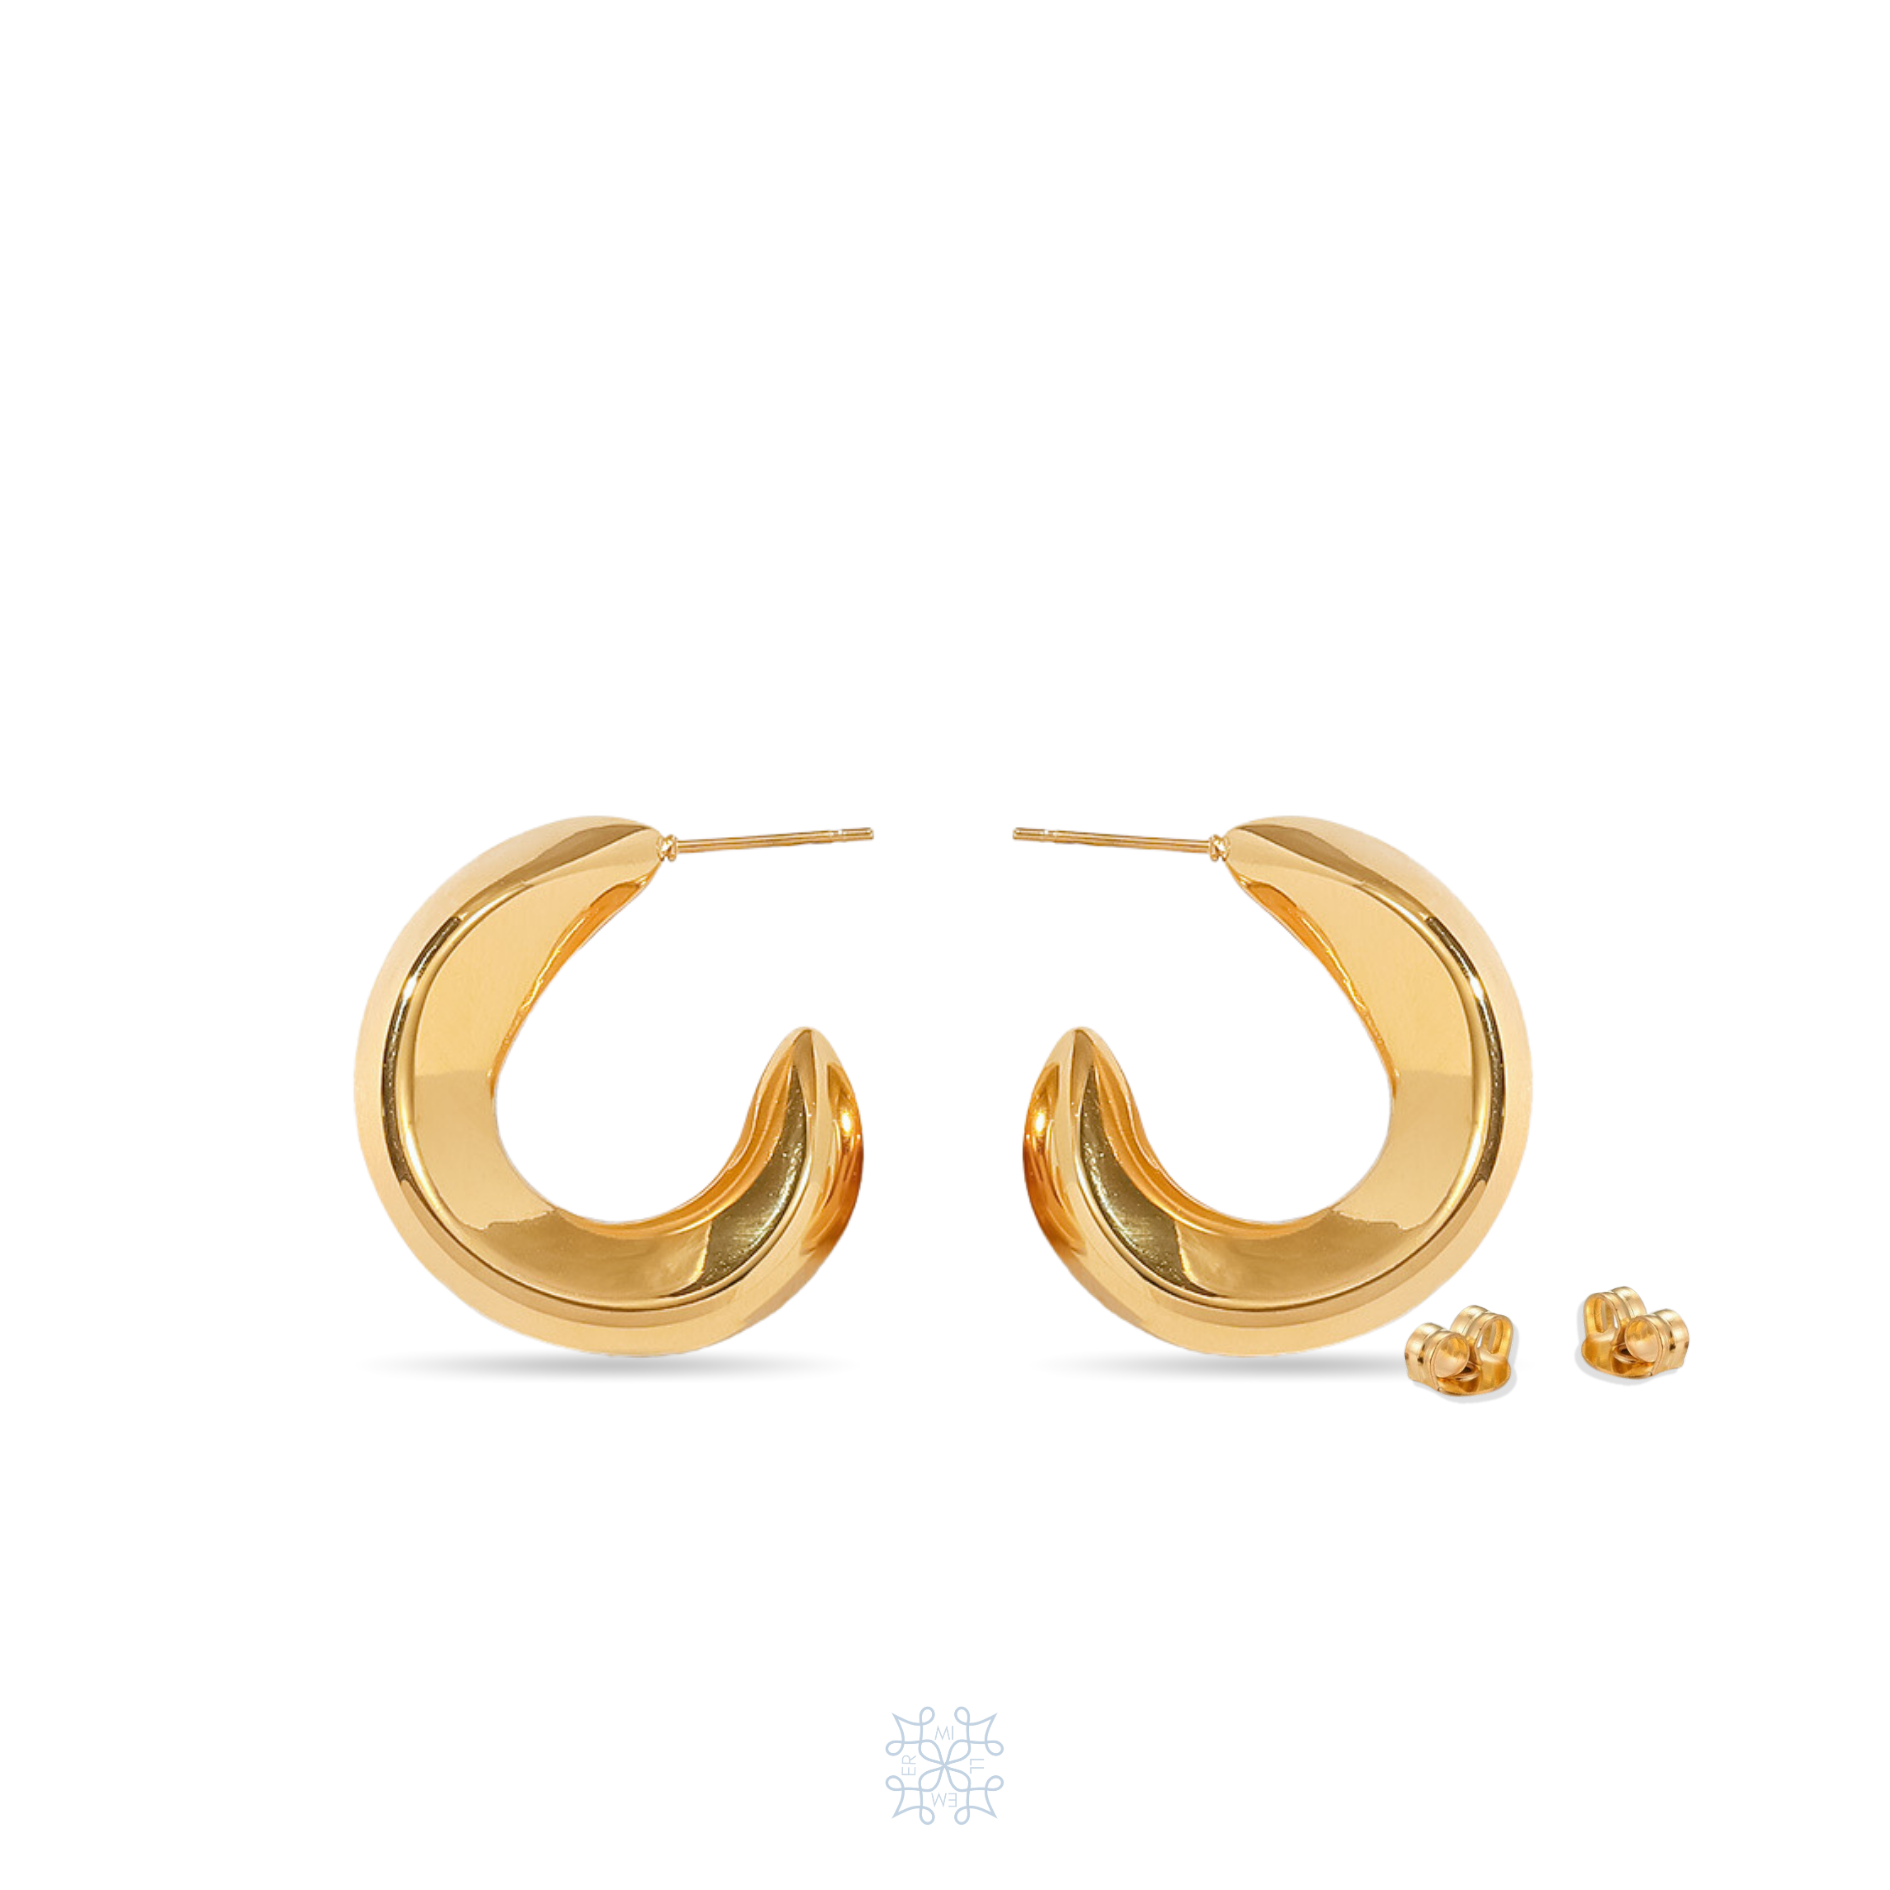 Gold irregular moon shaped hoop earrings. 